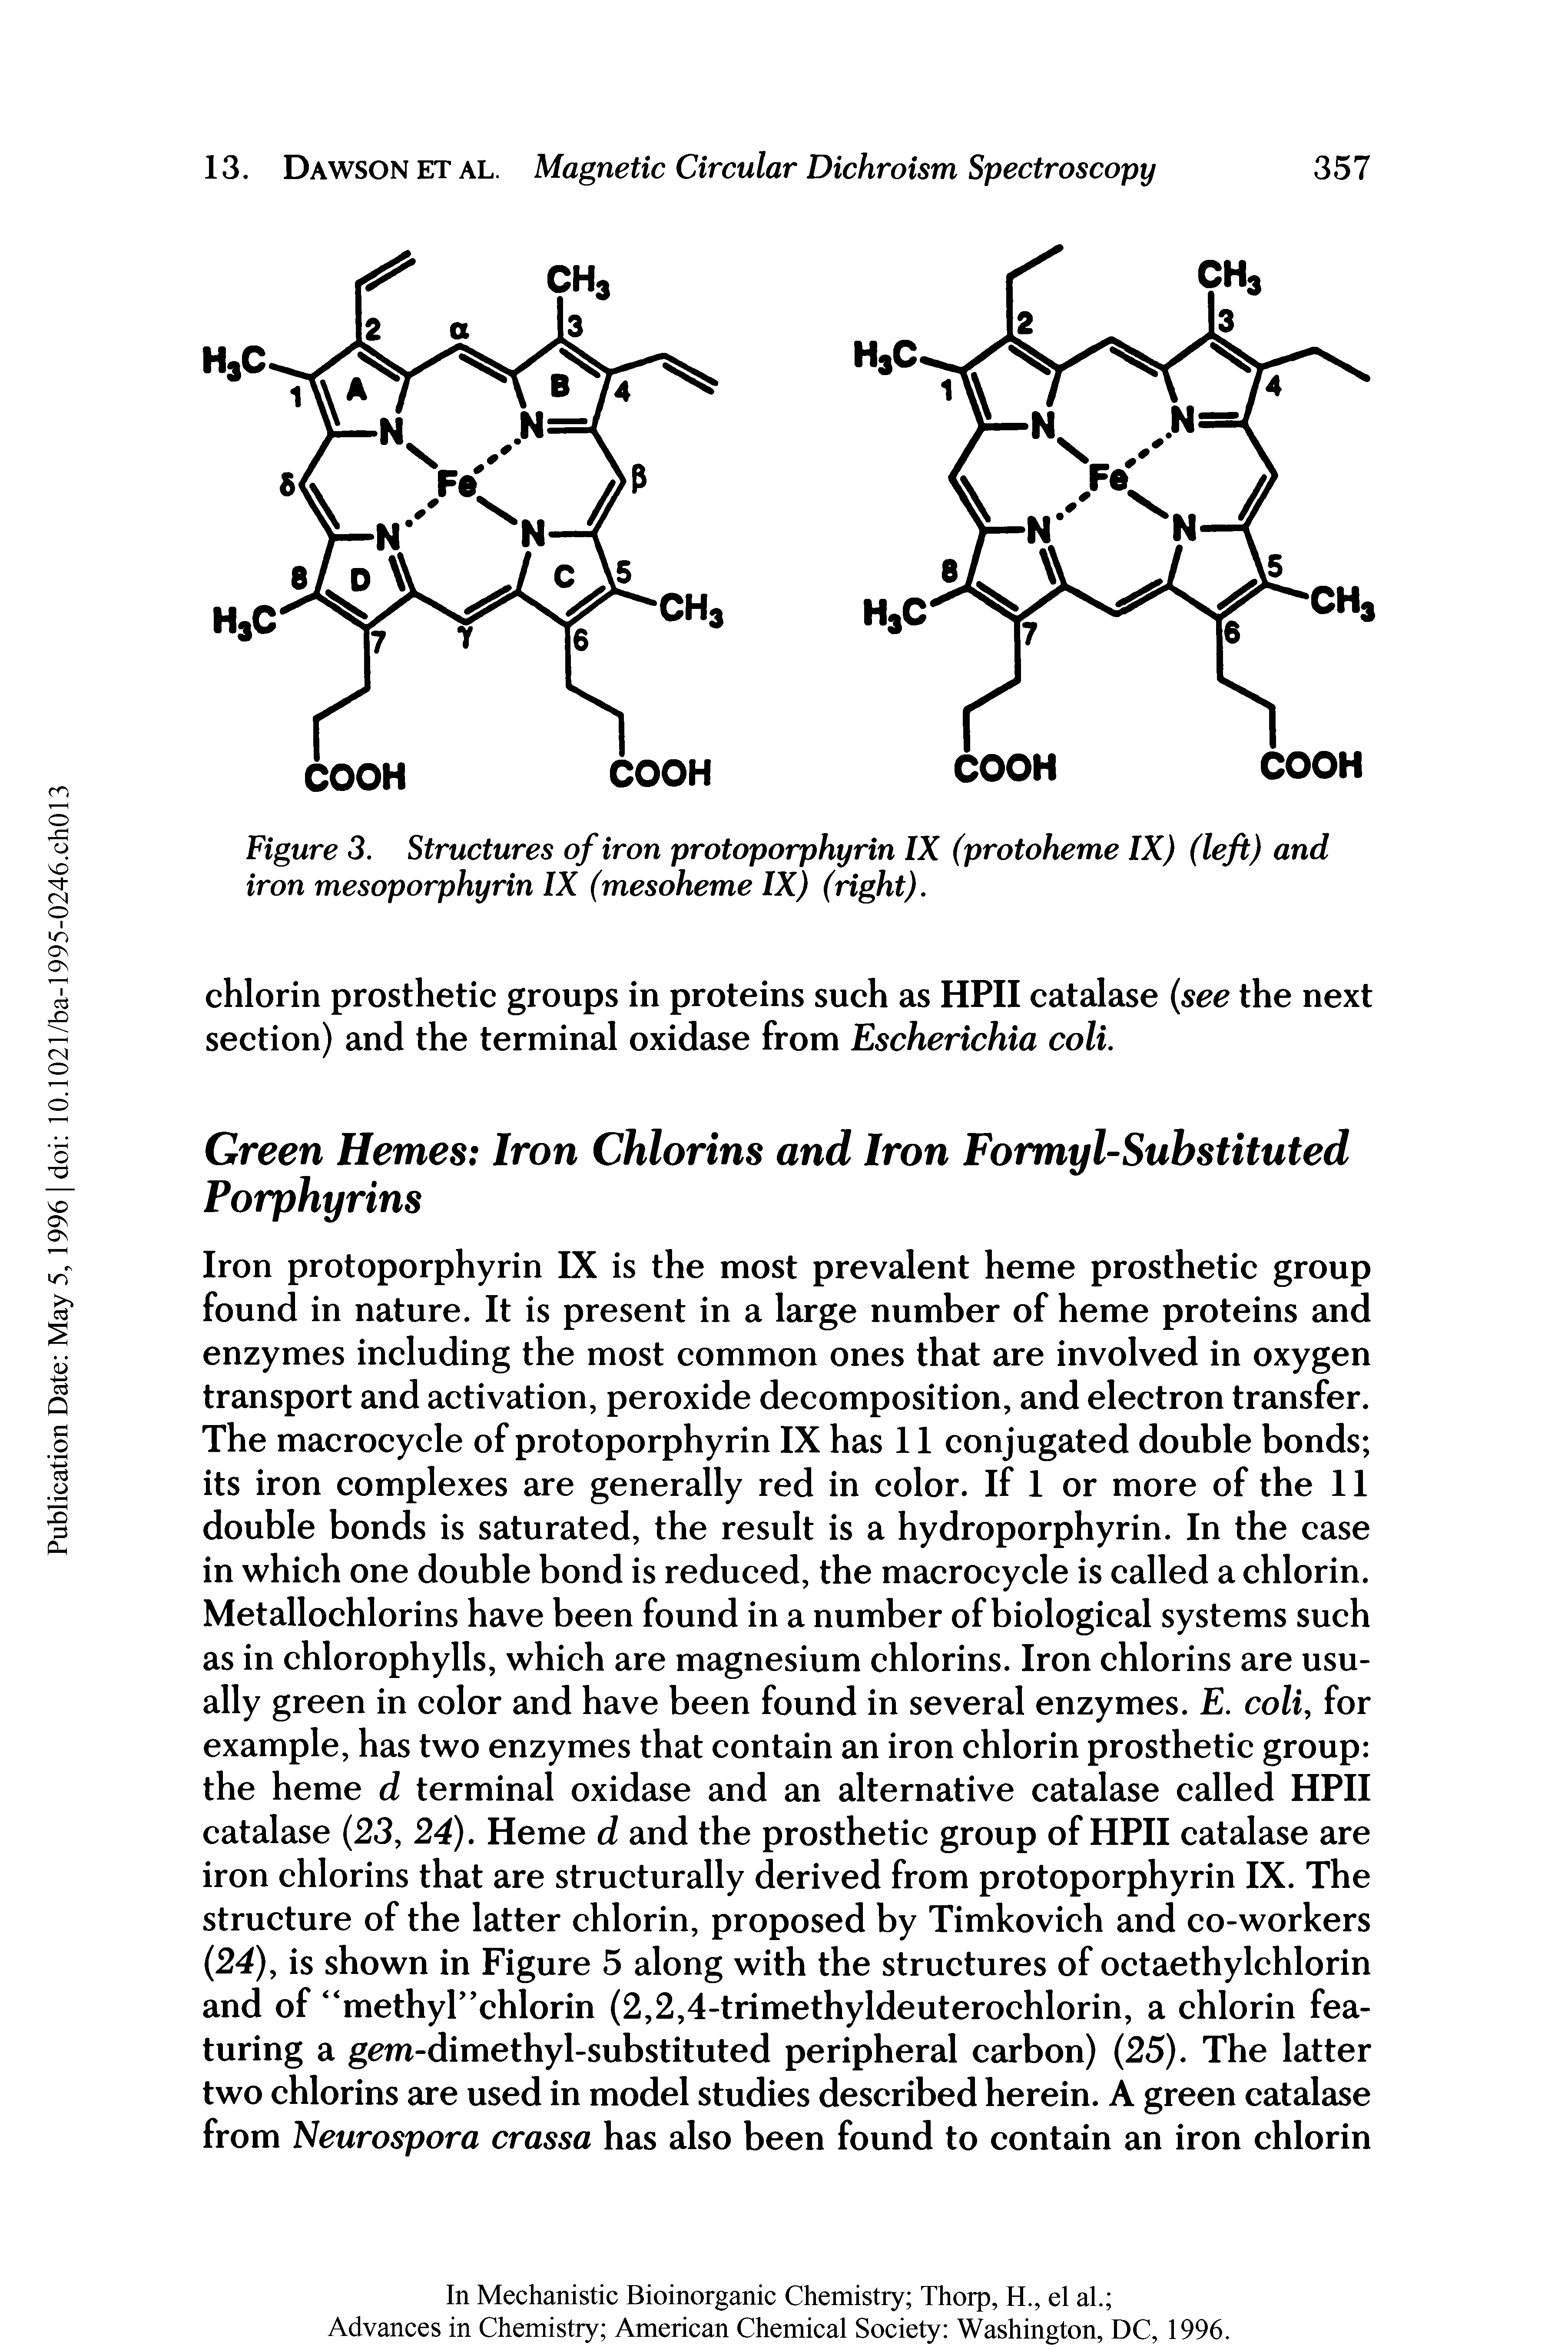 Figure 3. Structures of iron protoporphyrin IX (protoheme IX) (left) and iron mesoporphyrin IX (mesoheme IX) (right).